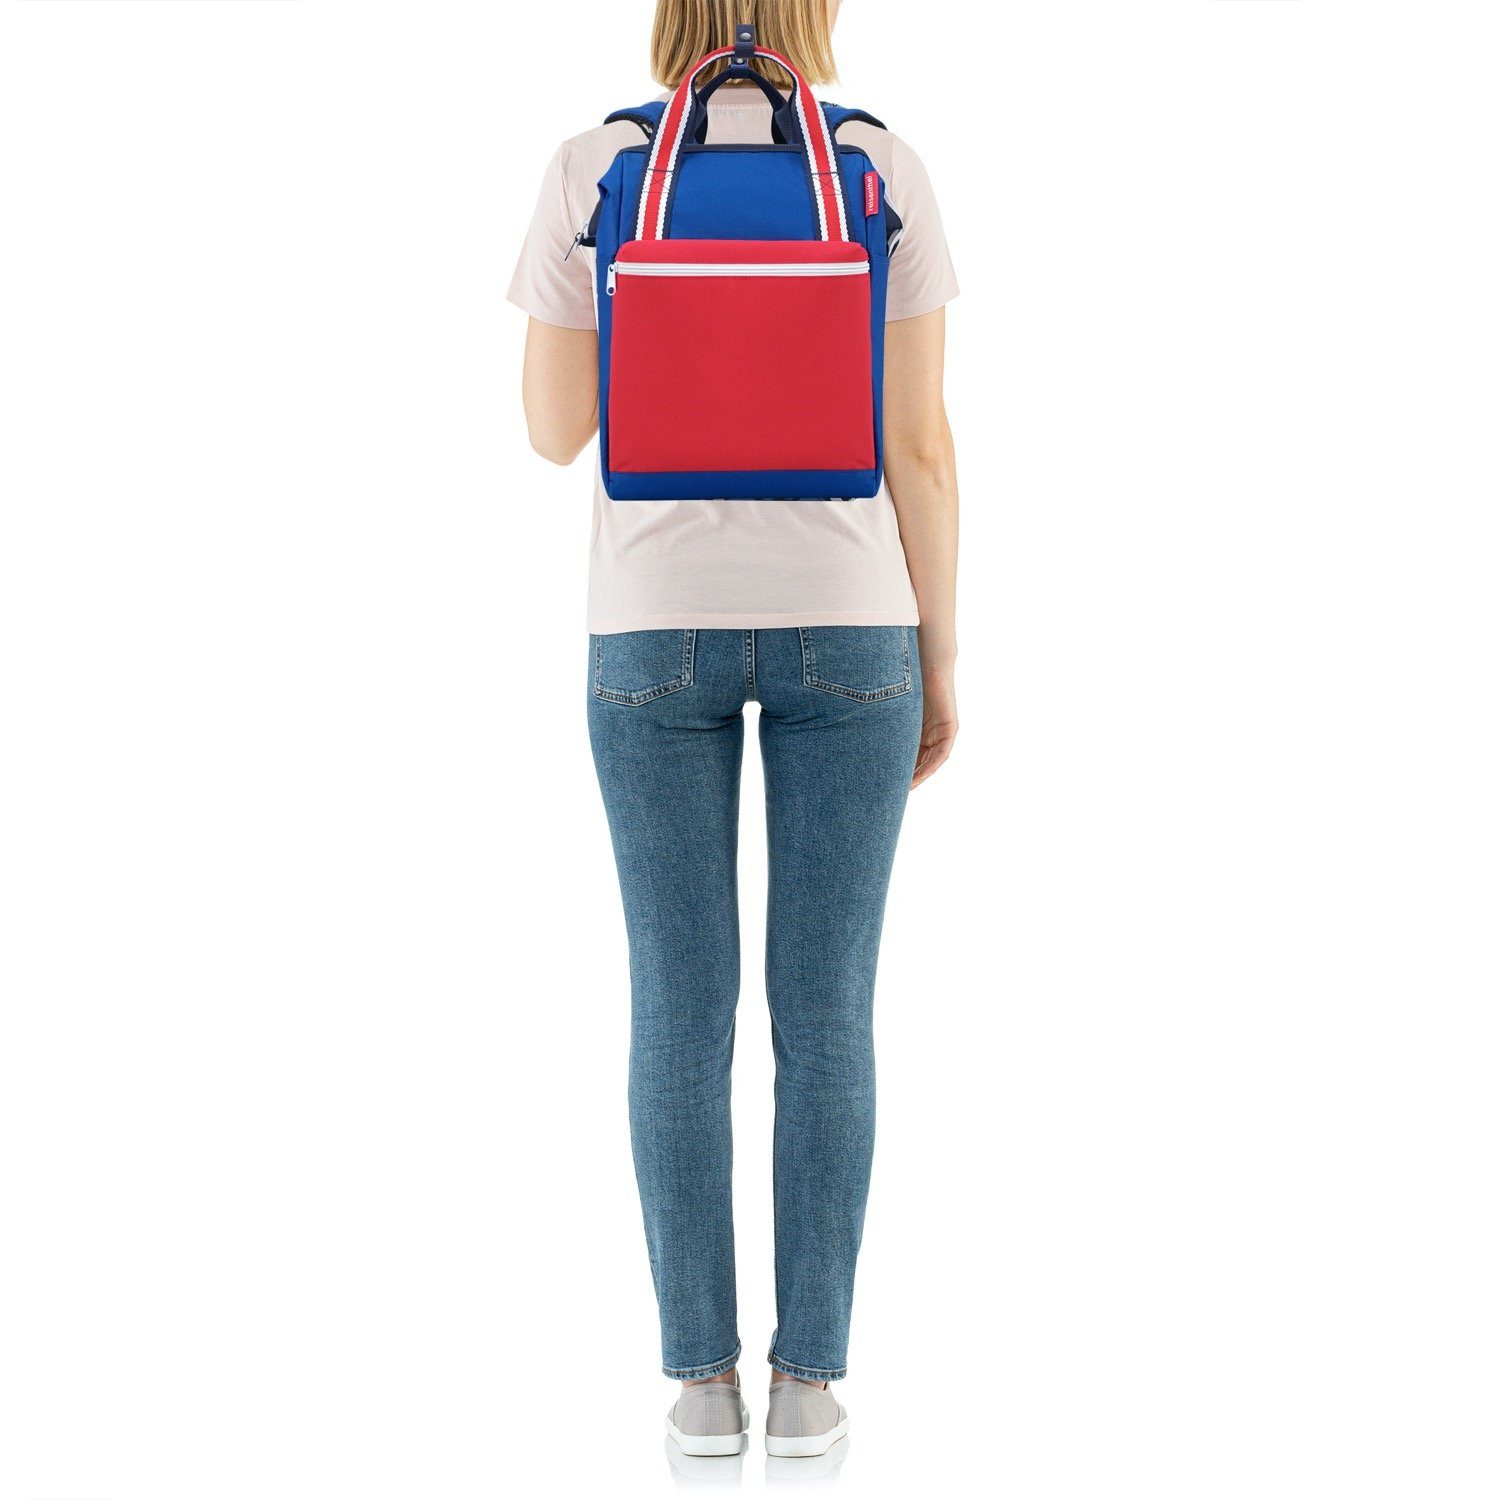 Backpack Cityrucksack, Ranzen reisenthel edition allrounder Tasche REISENTHEL® Rucksack special R nautic Tornister